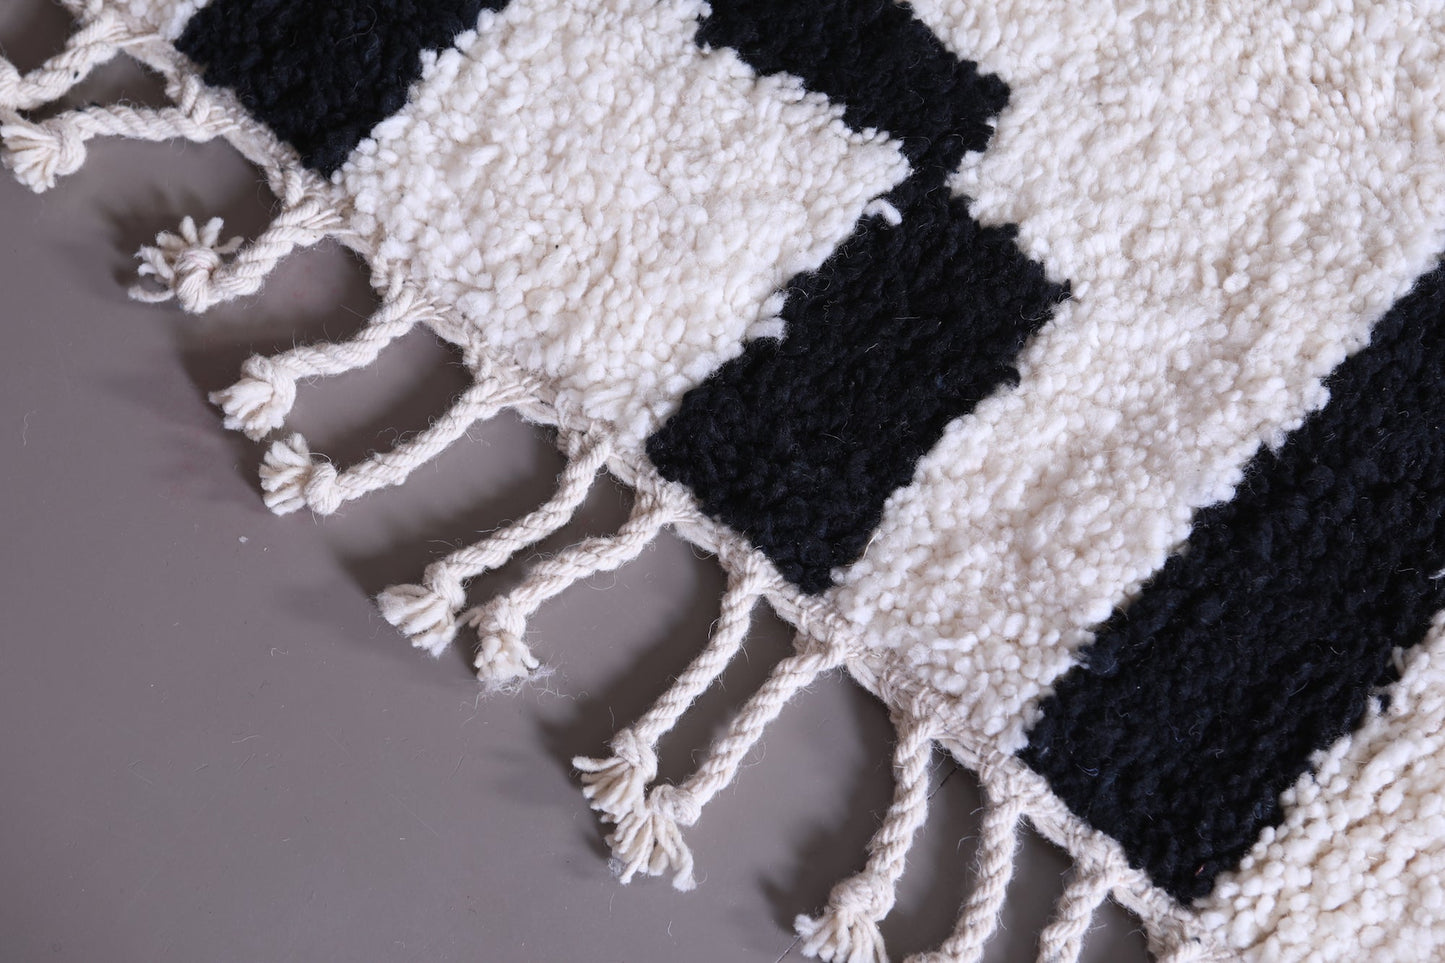 Black and white Moroccan carpet - Custom handmade rug